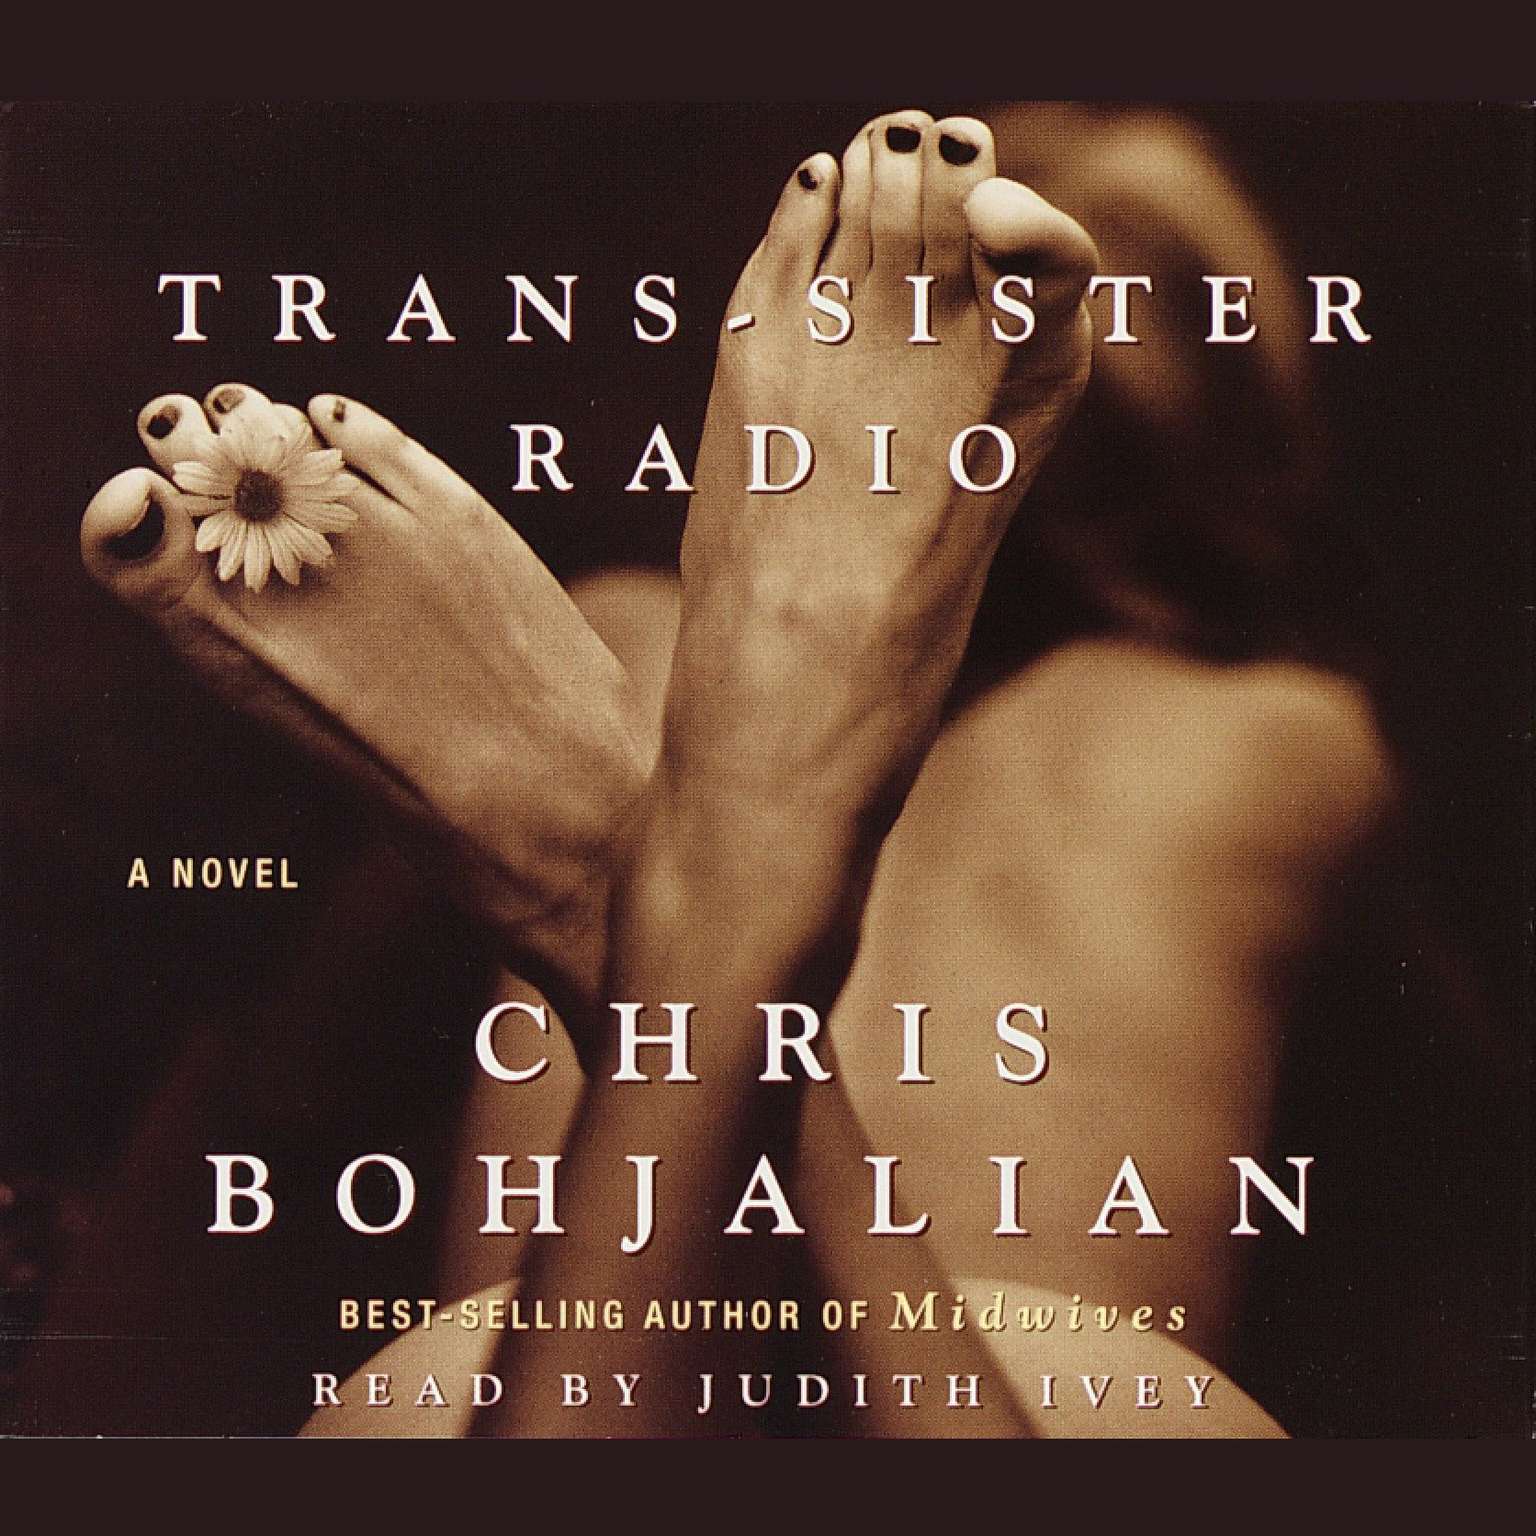 Trans-sister radio (2000, Harmony Books)